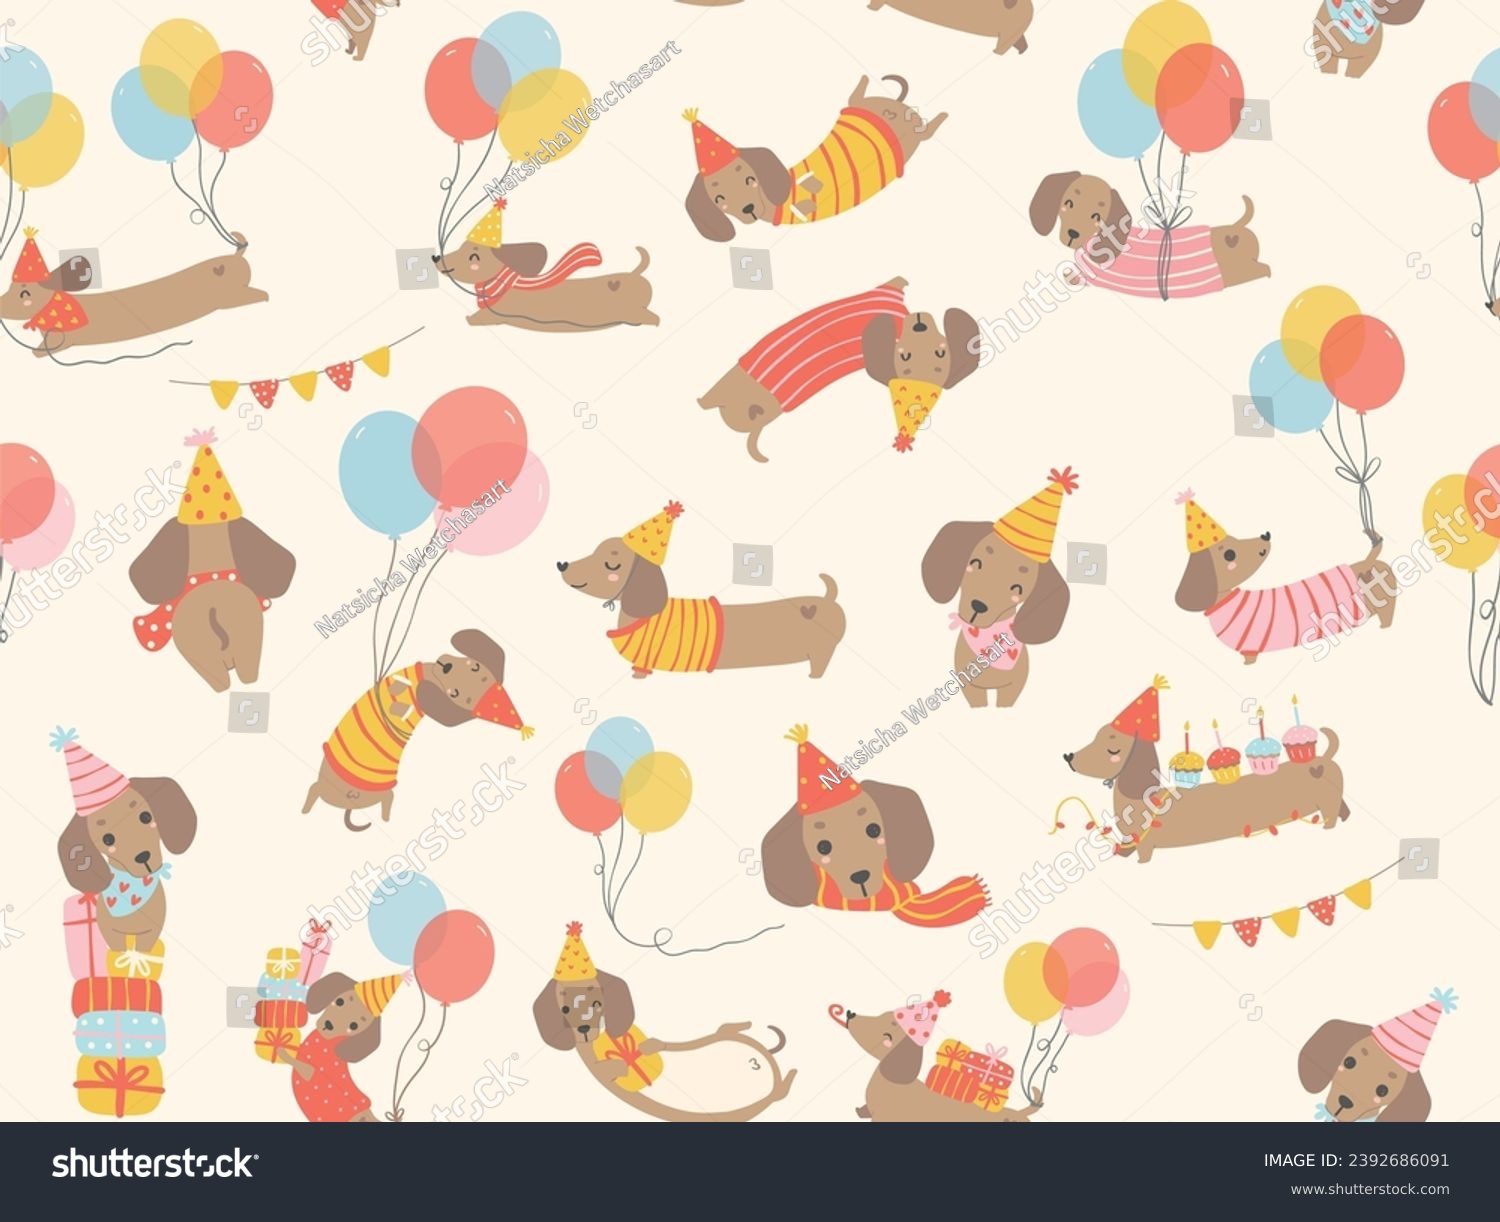 SVG of cute Birthday dog pattern seamless background with party dachshund sausage dog cartoon illustration. svg